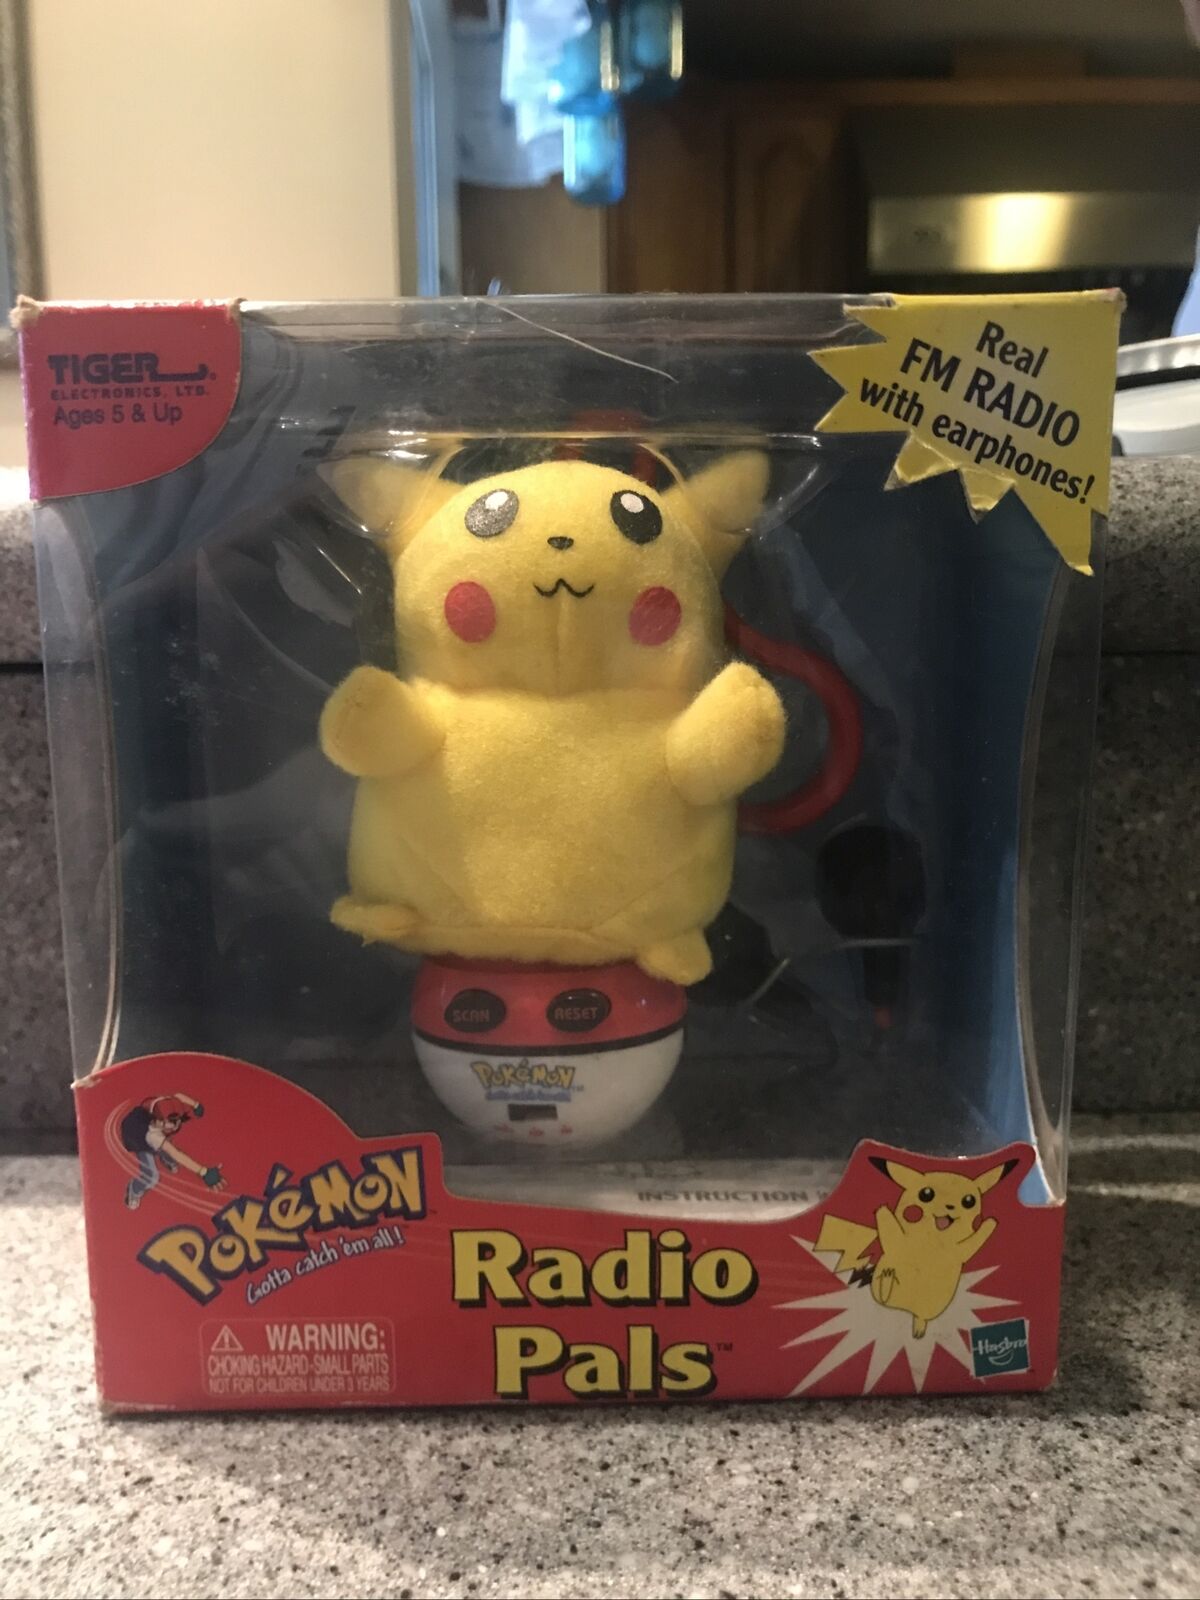 Tiger Electronics pokemon pikachu radio pals PLEASE READ